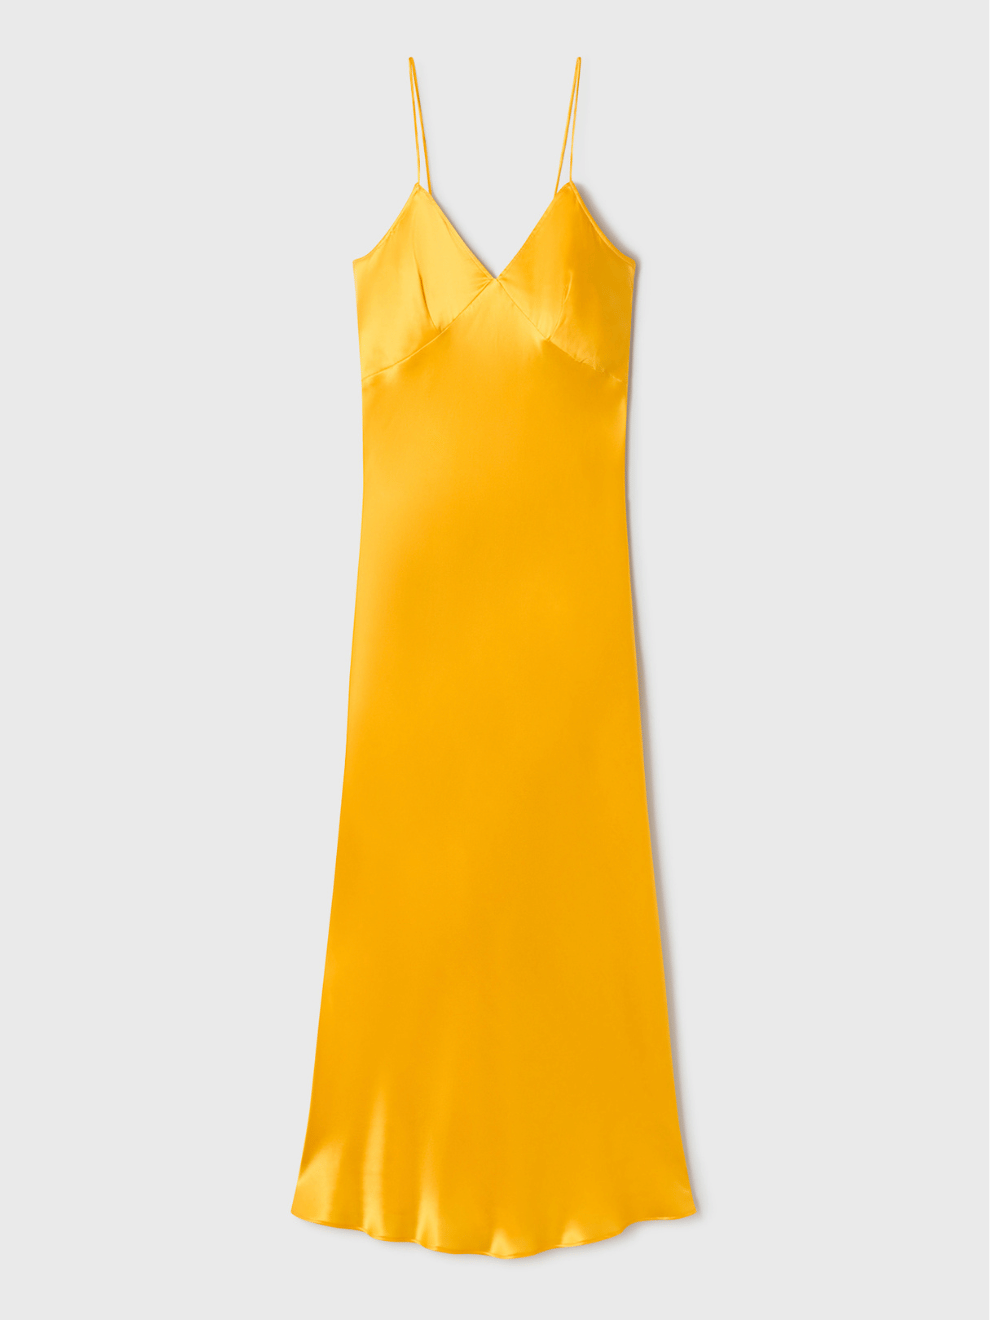 Deco Rouleau Dress in Marigold